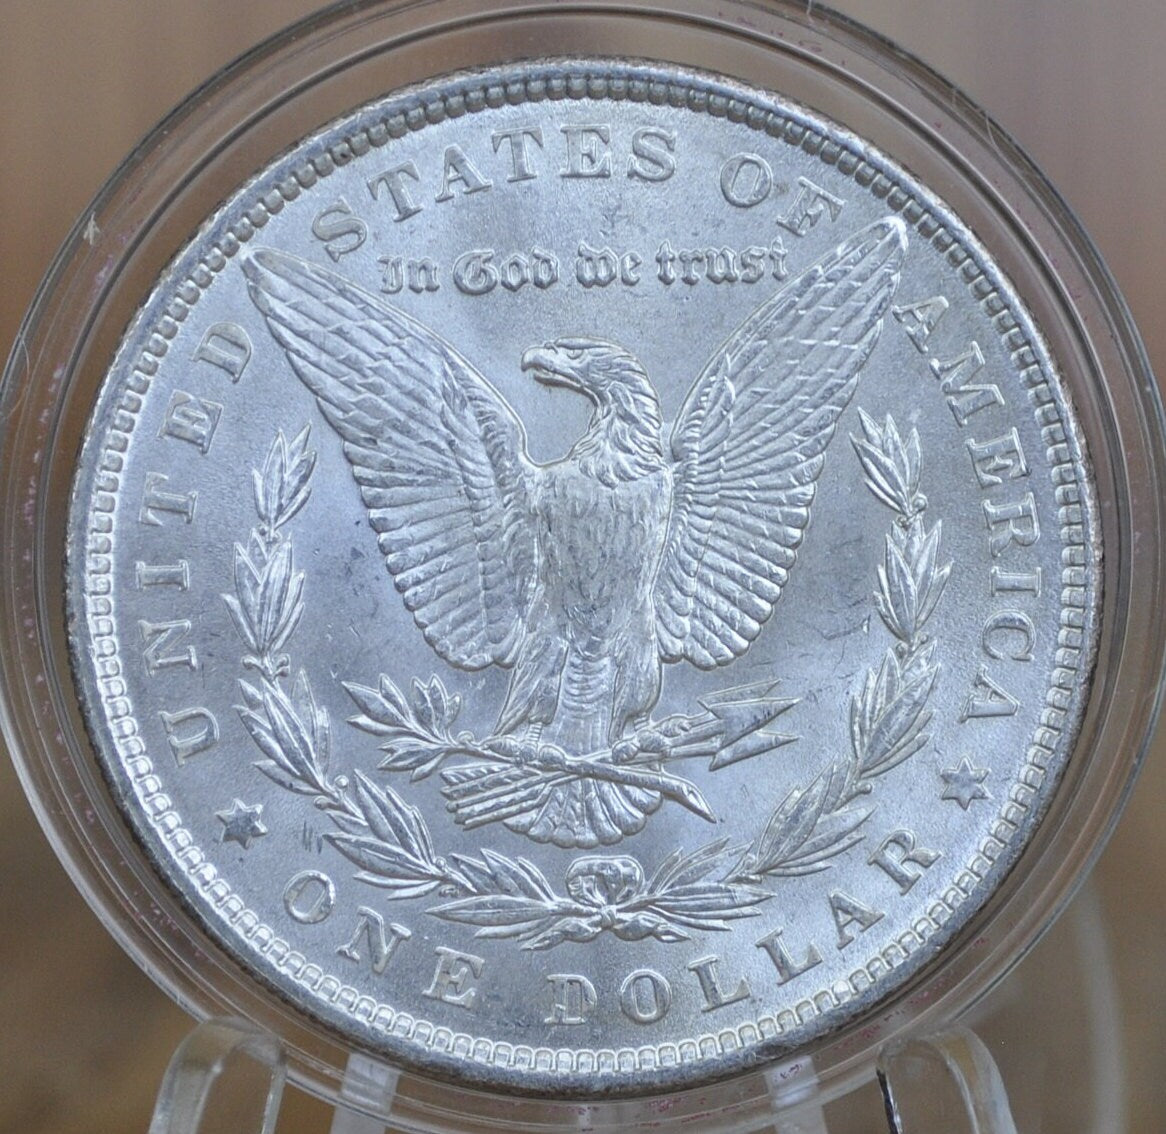 1888 Morgan Silver Dollar - VF-MS63 (Very Fine to Uncirculated) Choose by Grade -1888-P Morgan Dollar 1888 Silver Dollar - Philadelphia Mint